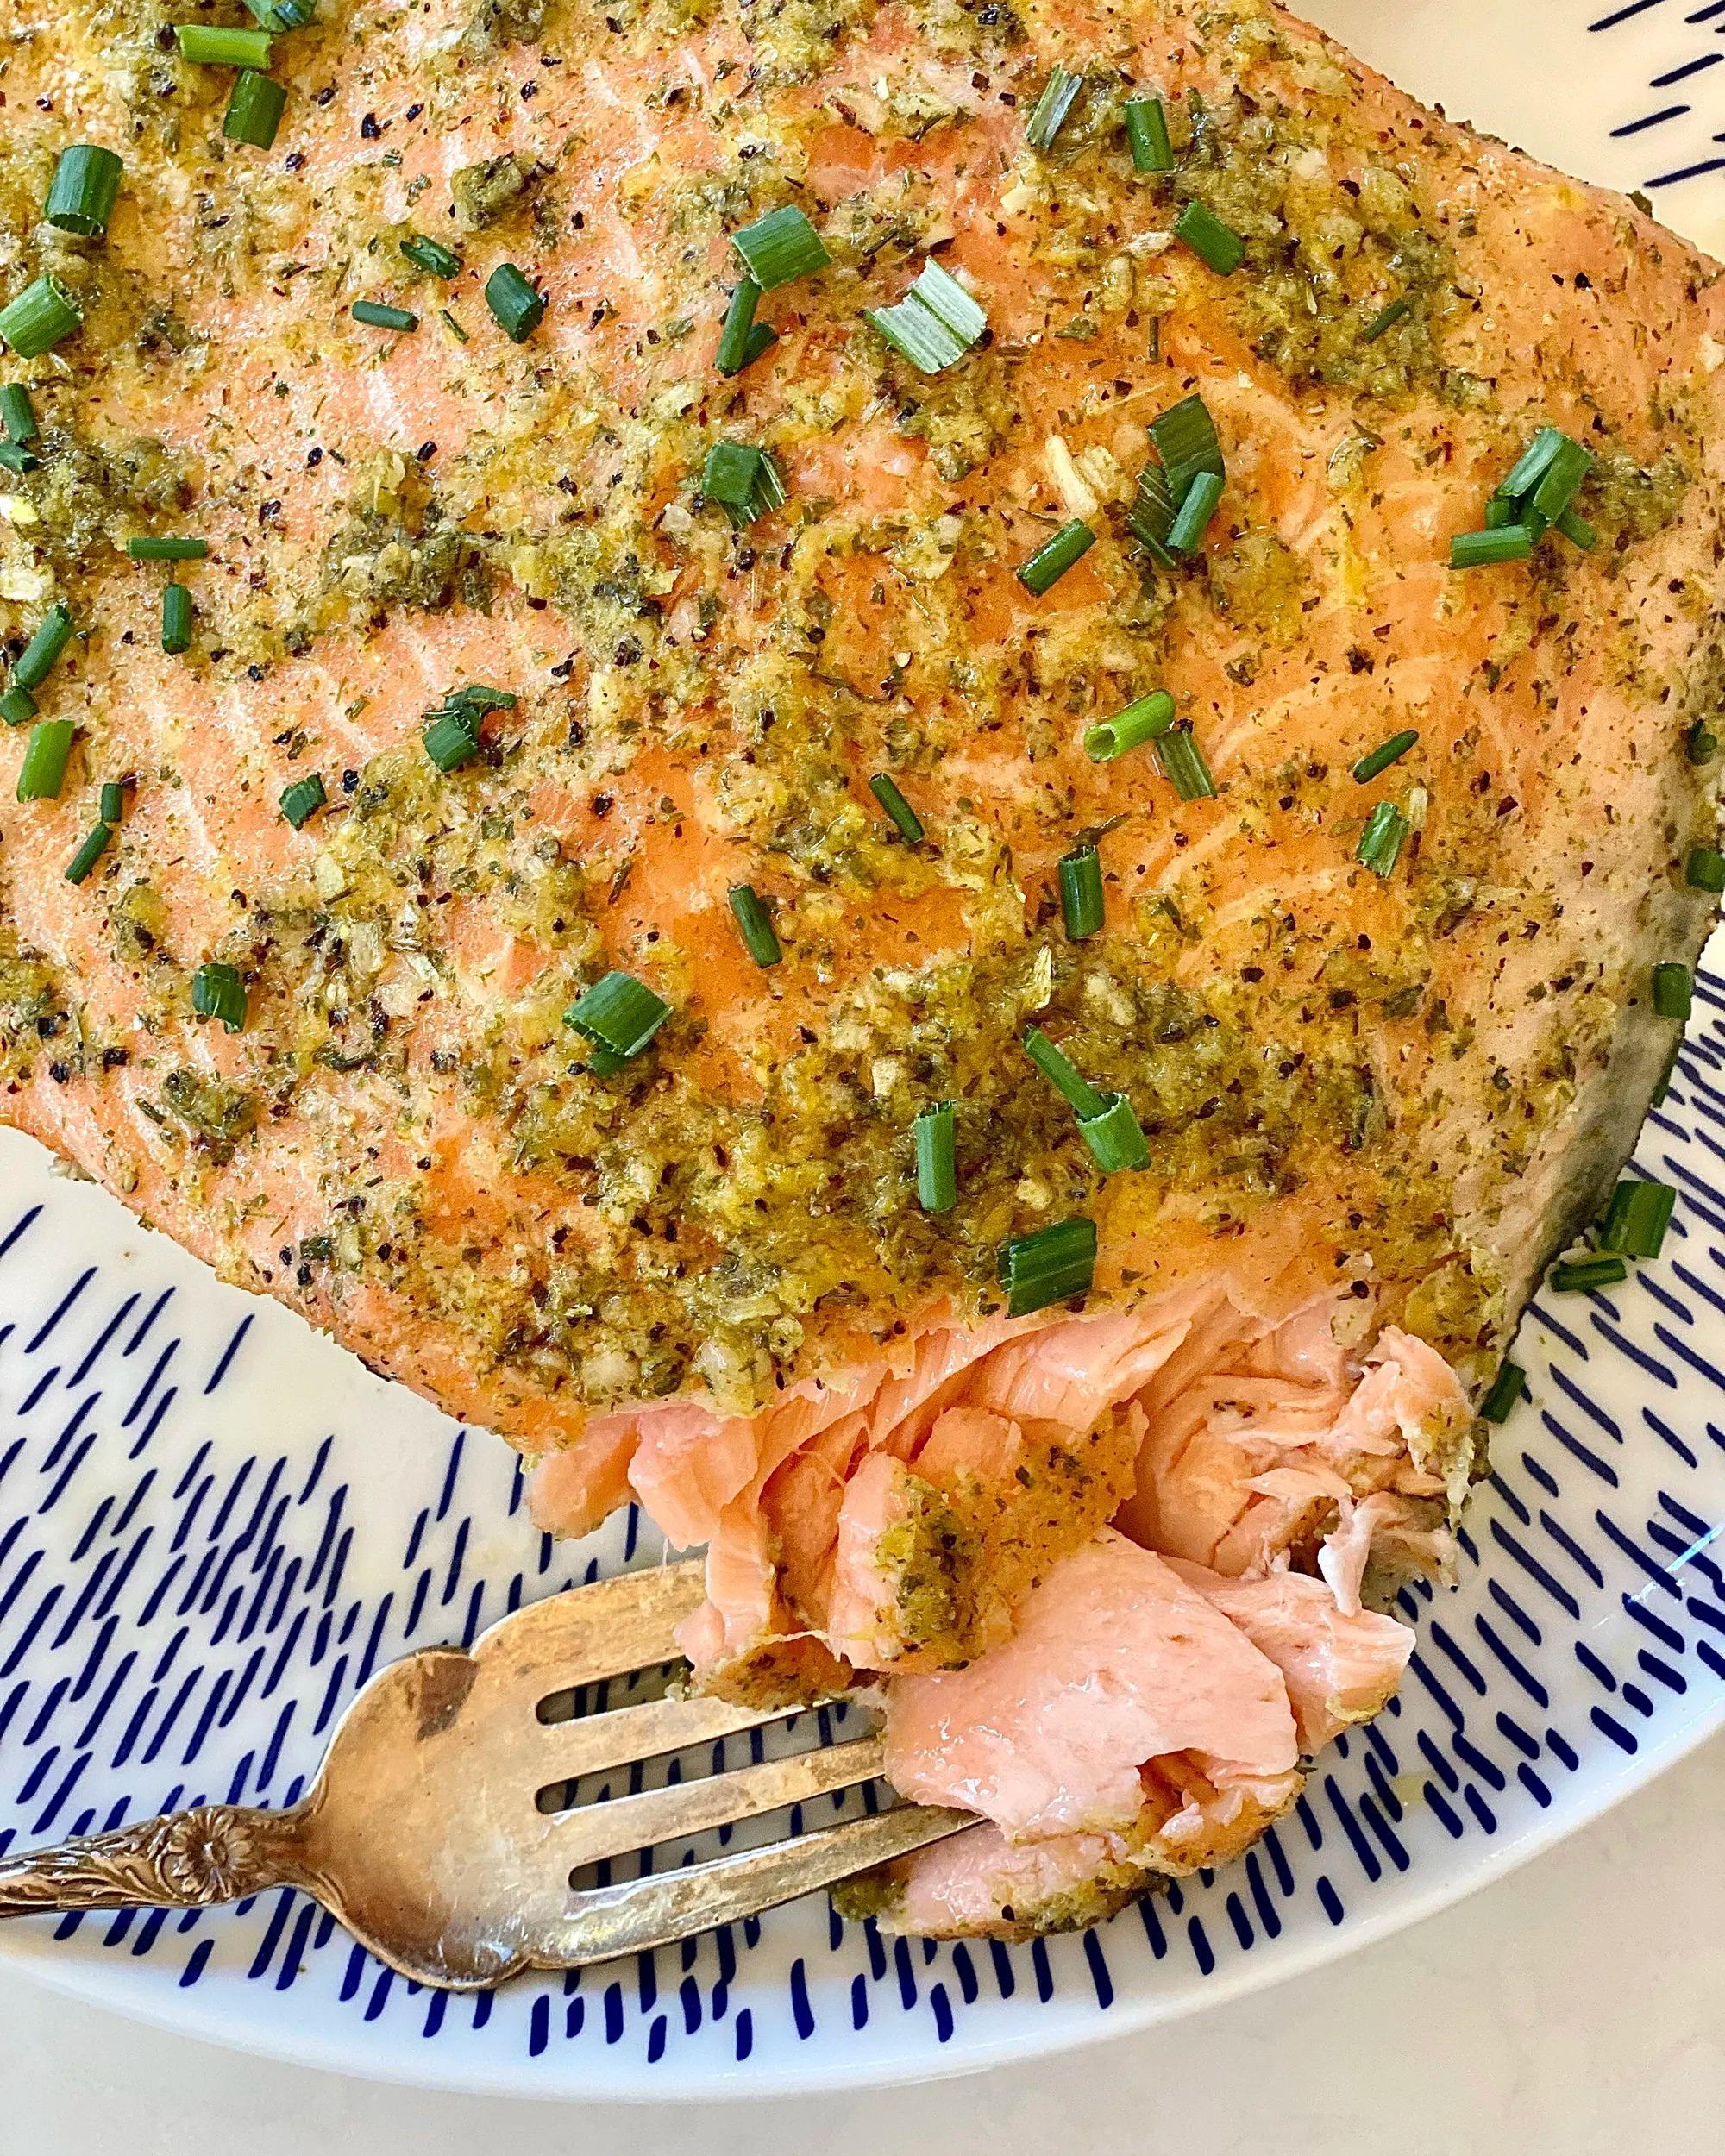 Salmon Recipes